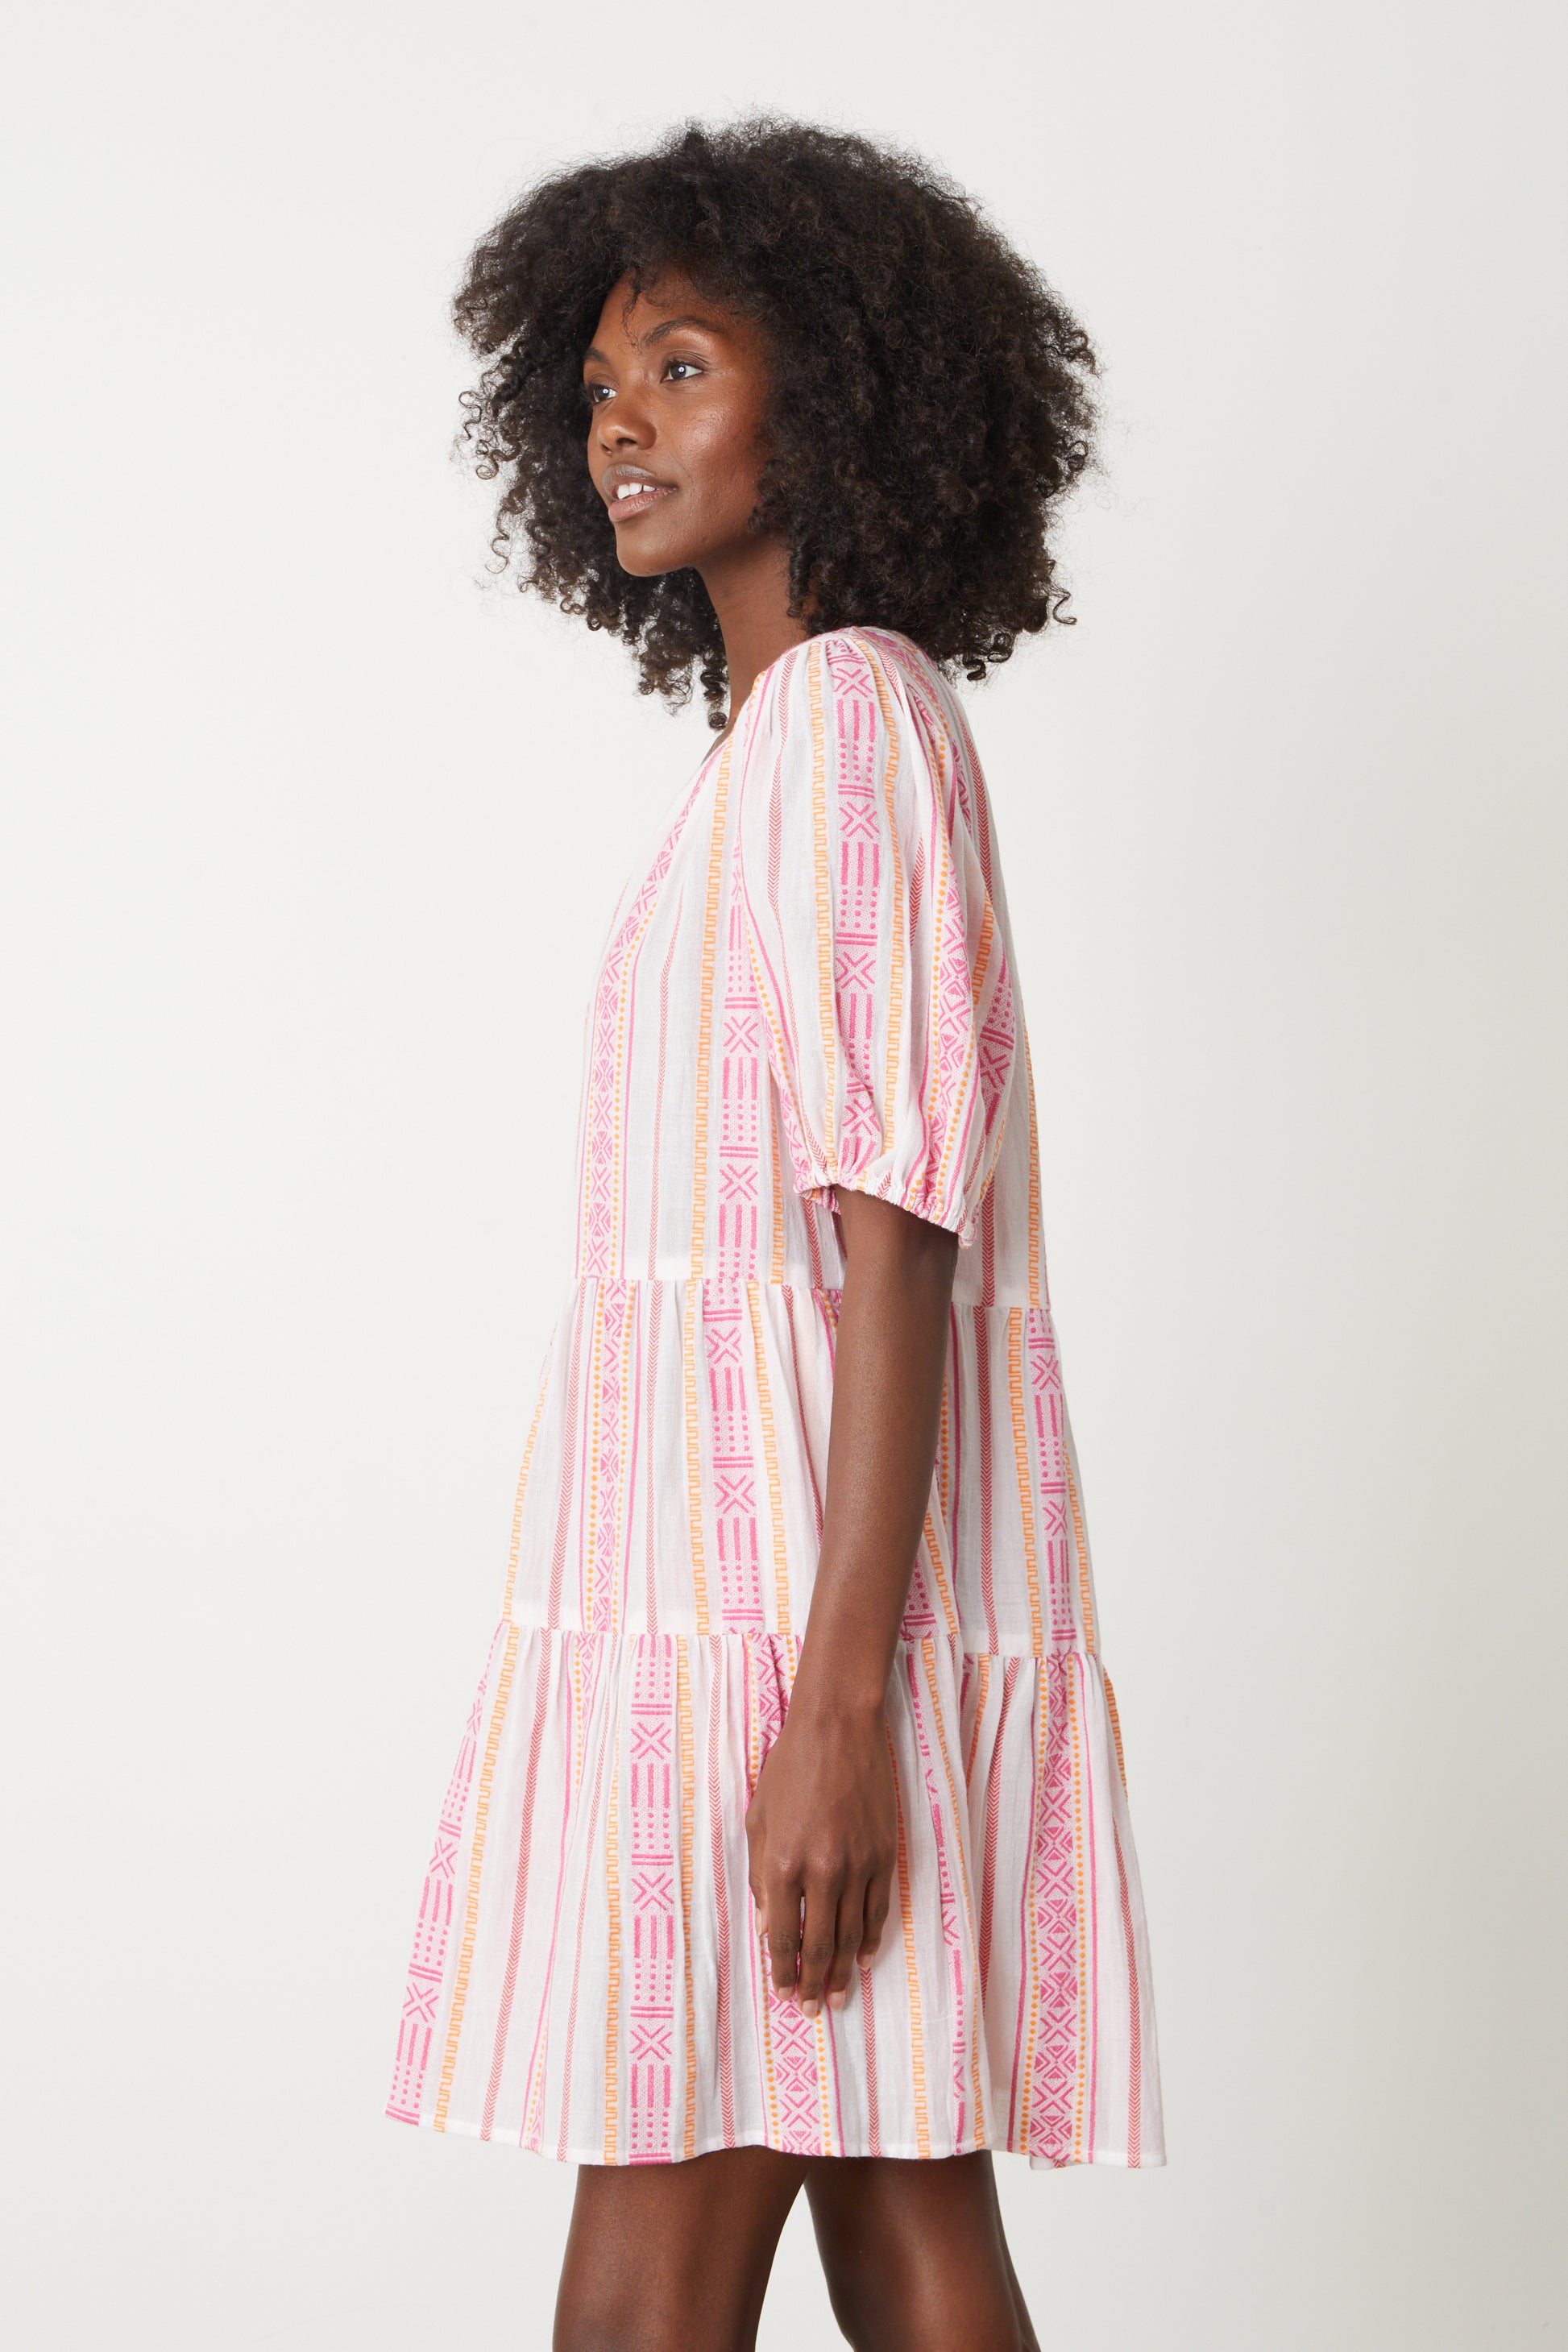   The model is wearing a Velvet by Graham & Spencer MONIQUE JACQUARD BOHO DRESS in pink and white stripe jacquard print 